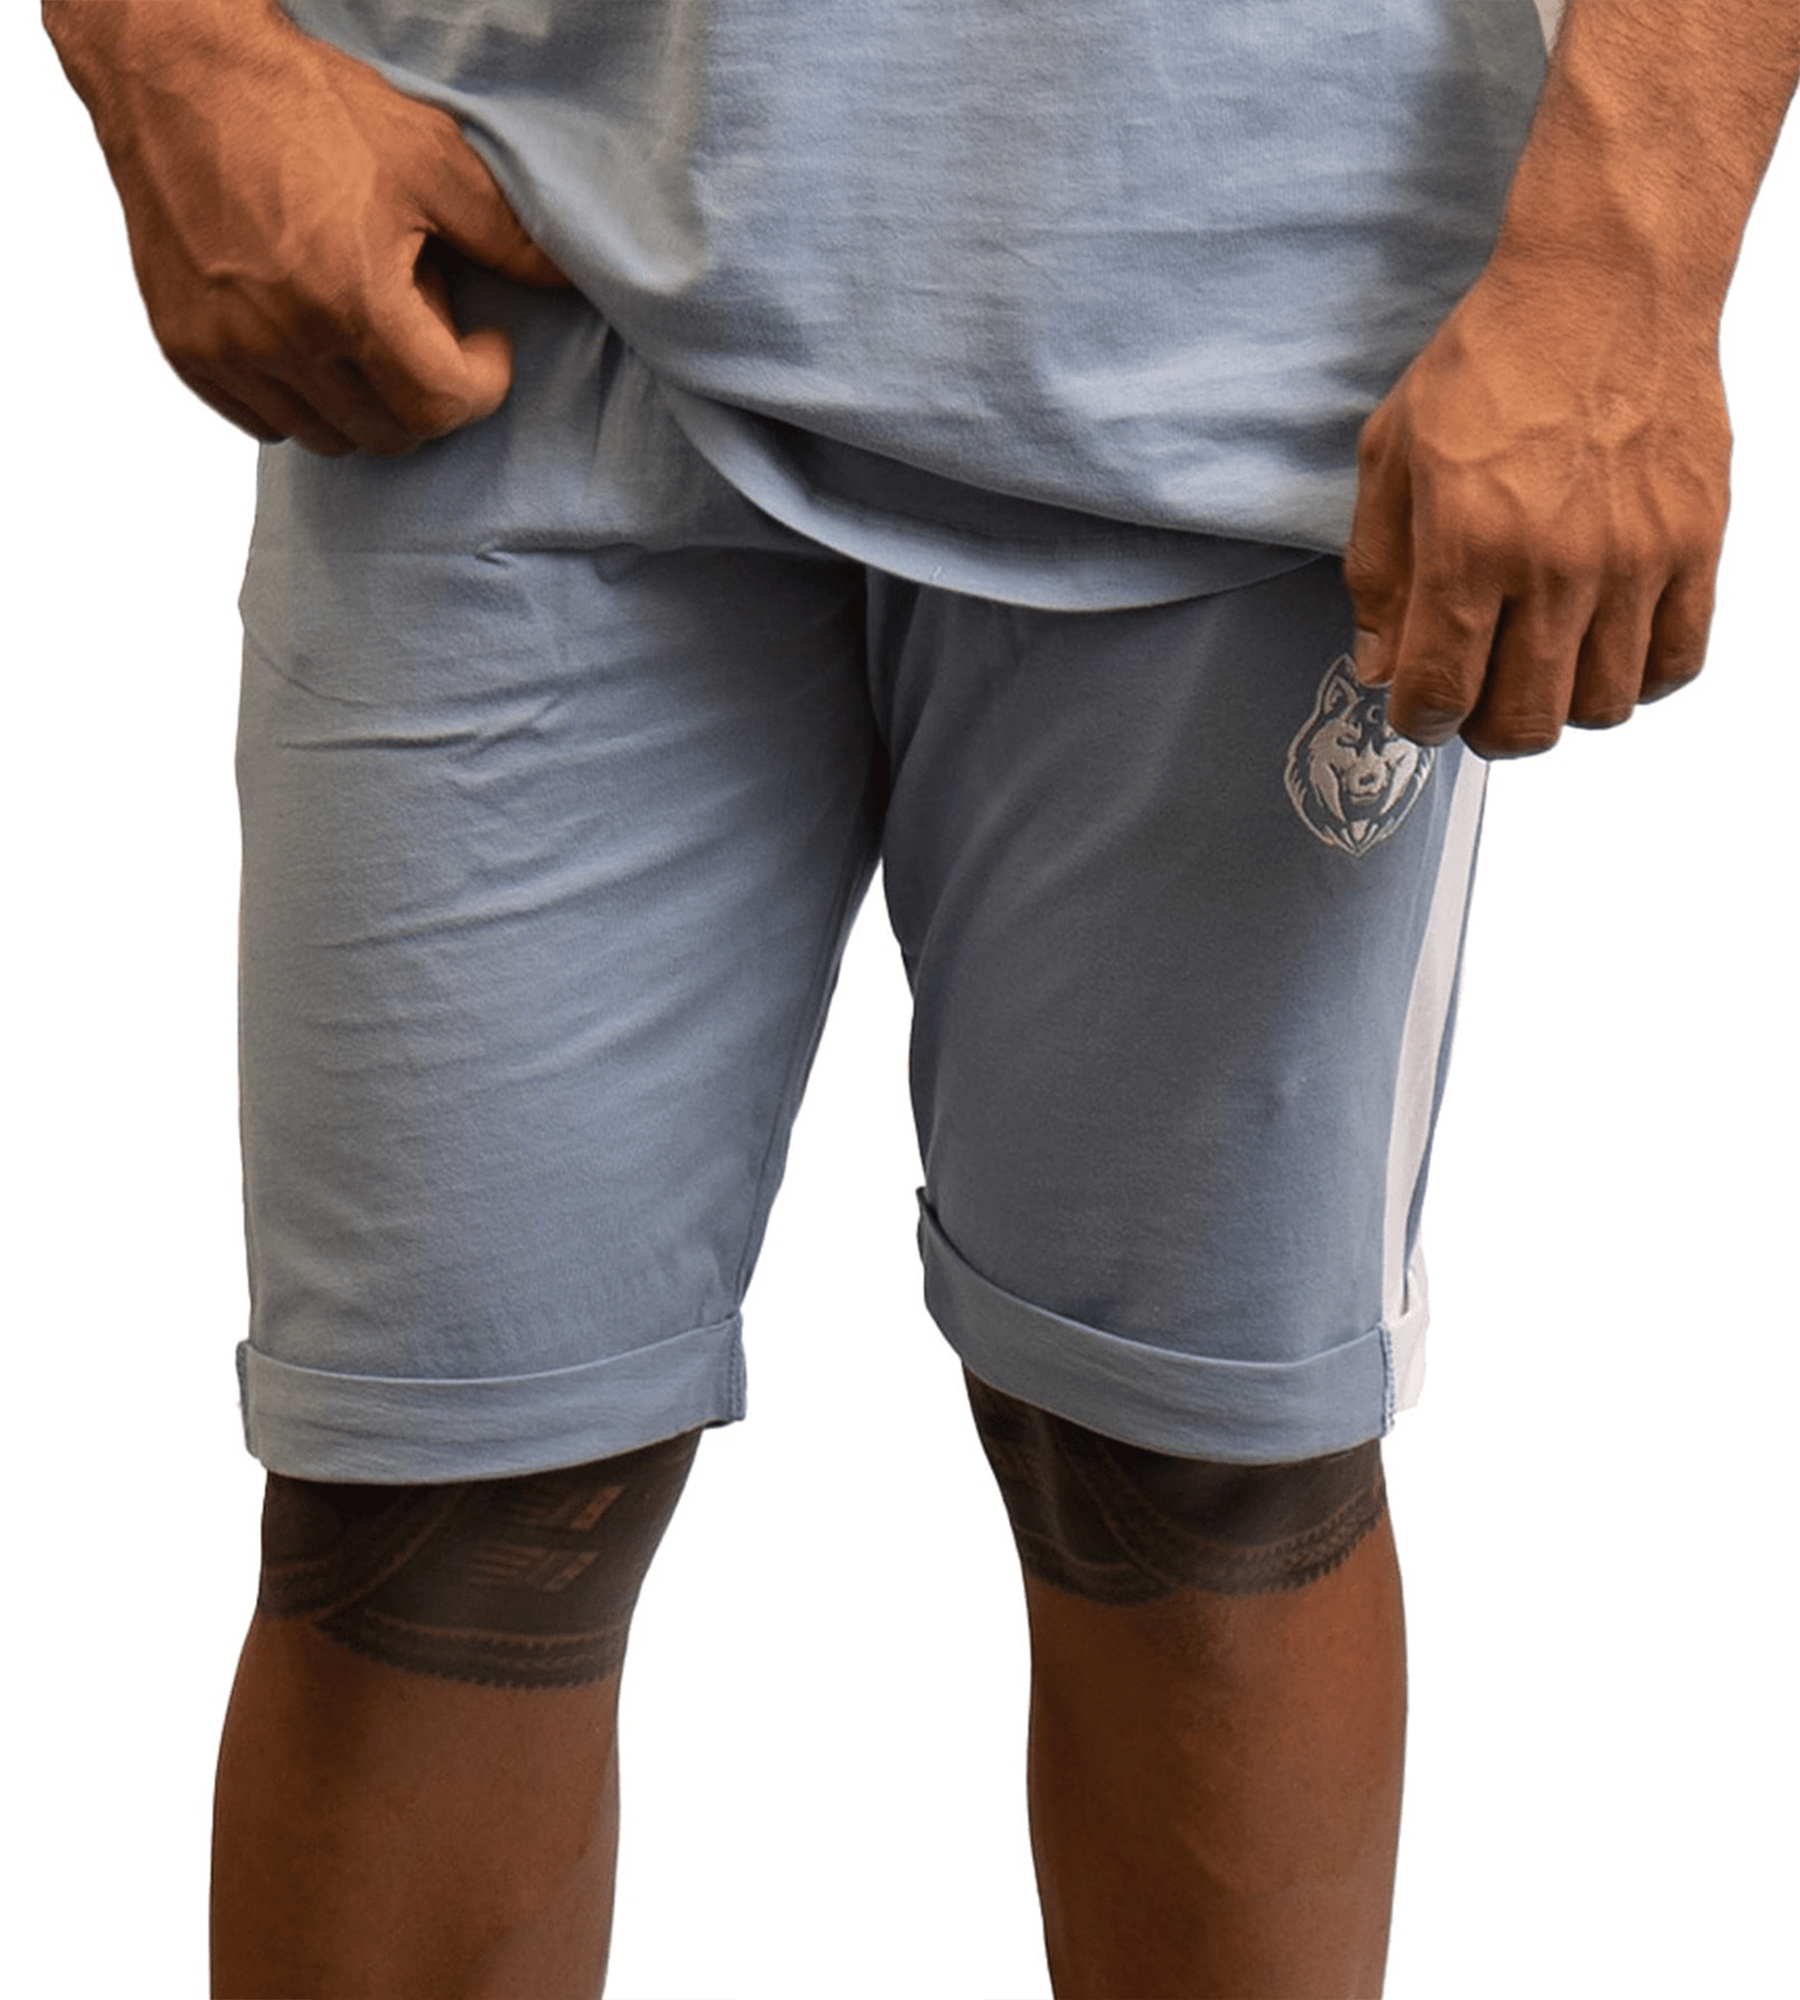 Fitnessfox UNISEX Gym Shorts (Blue)